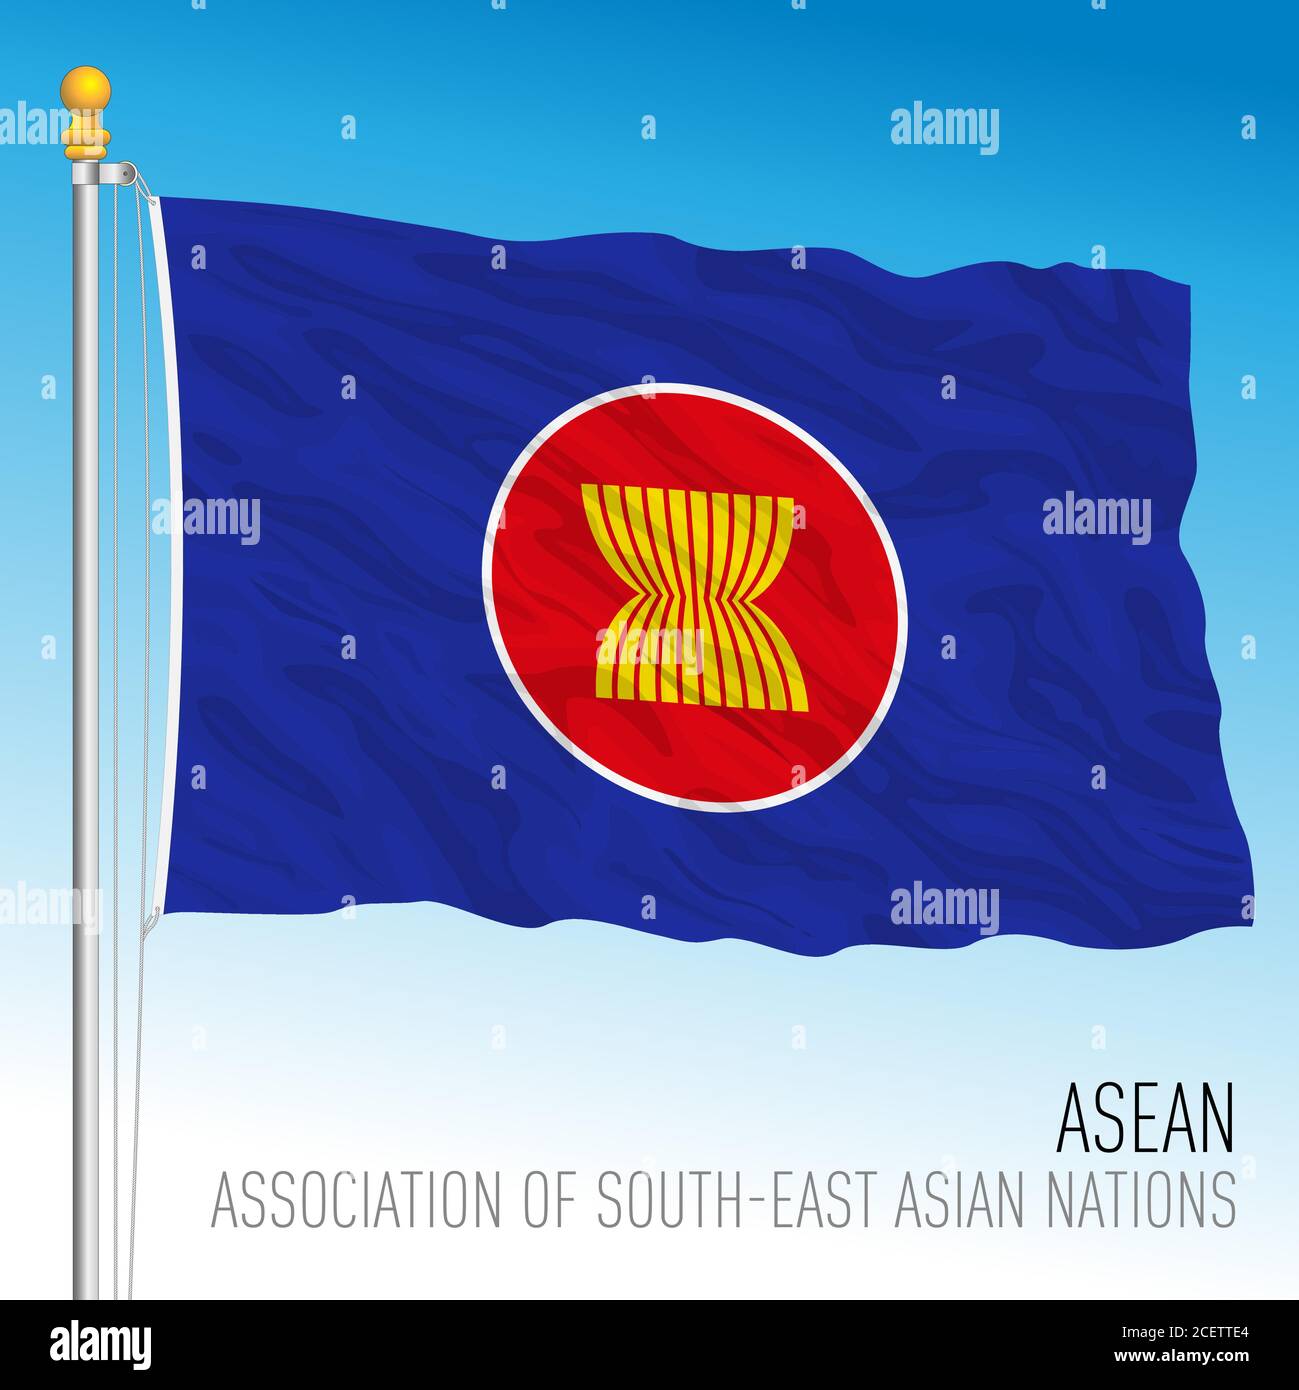 ASEAN Association of South-East Asian Nations Flagge, internationale Organisation, Vektor-Illustration Stock Vektor